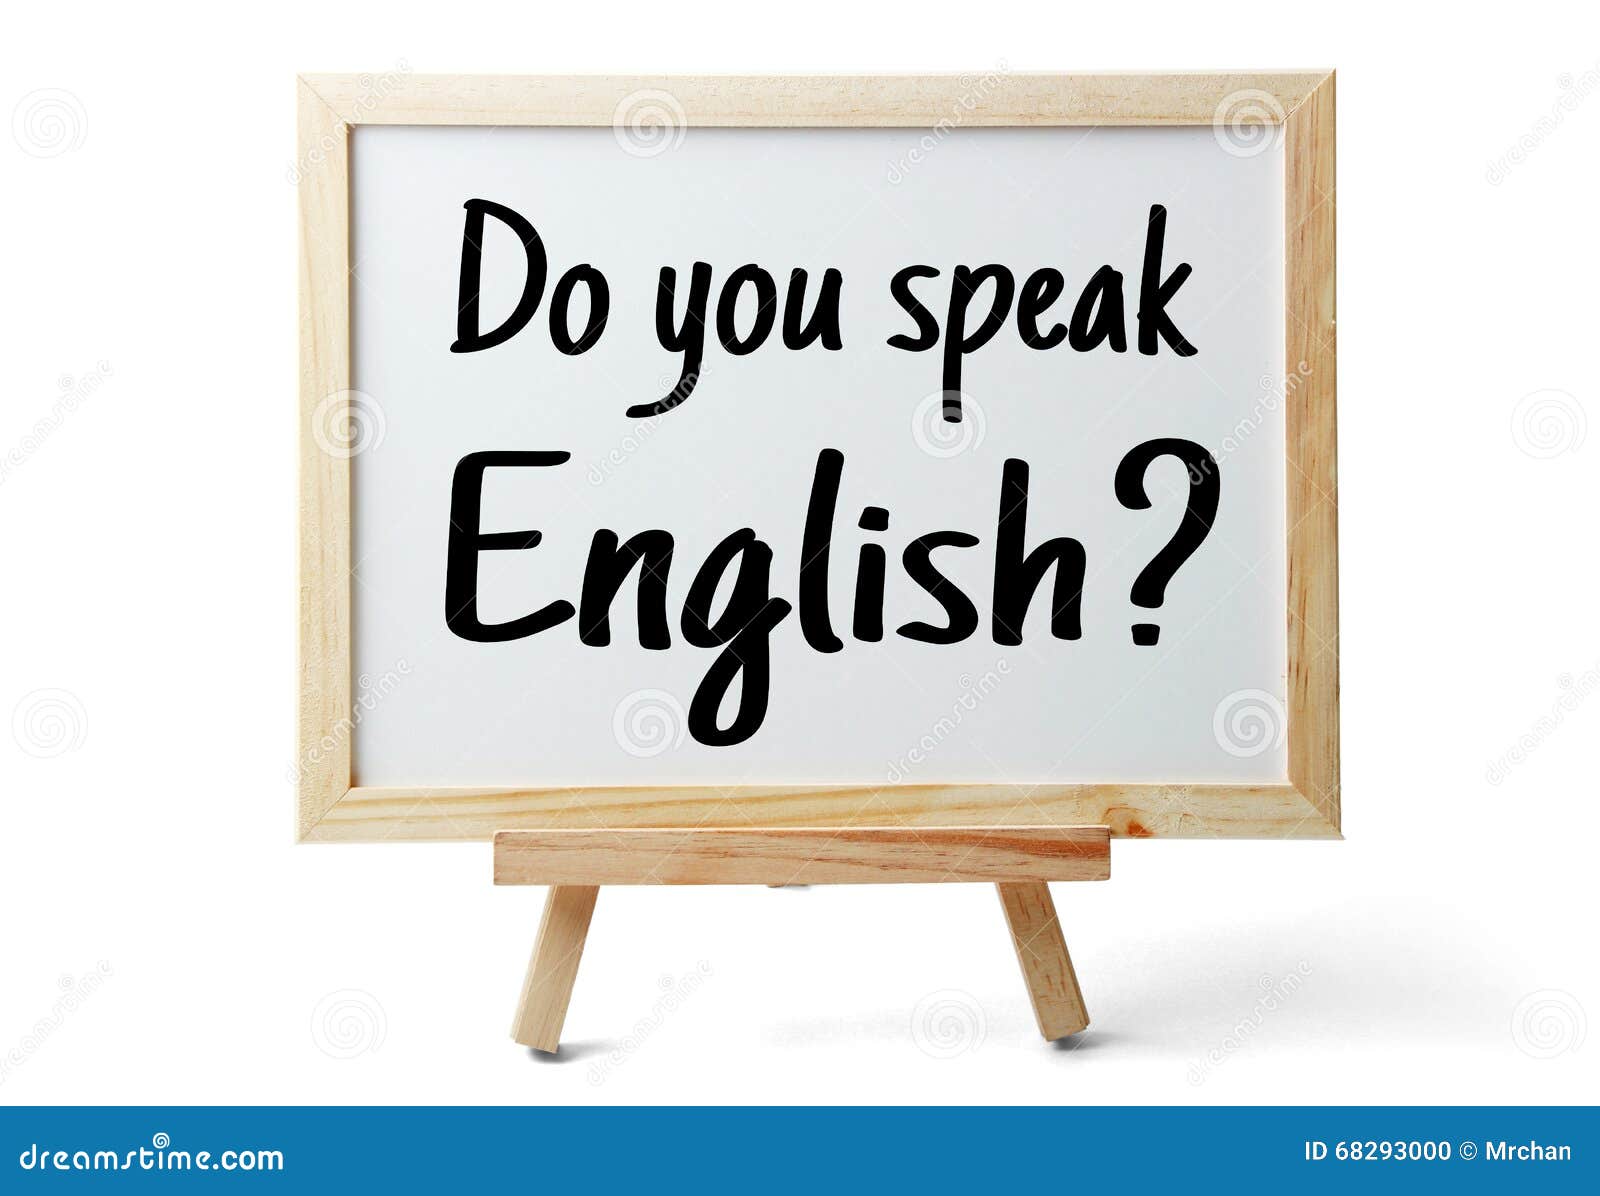 Do you speak english well. Надпись do you speak. Do you speak English табличка. Speak English на прозрачном фоне. Школьная доска do you speak English.